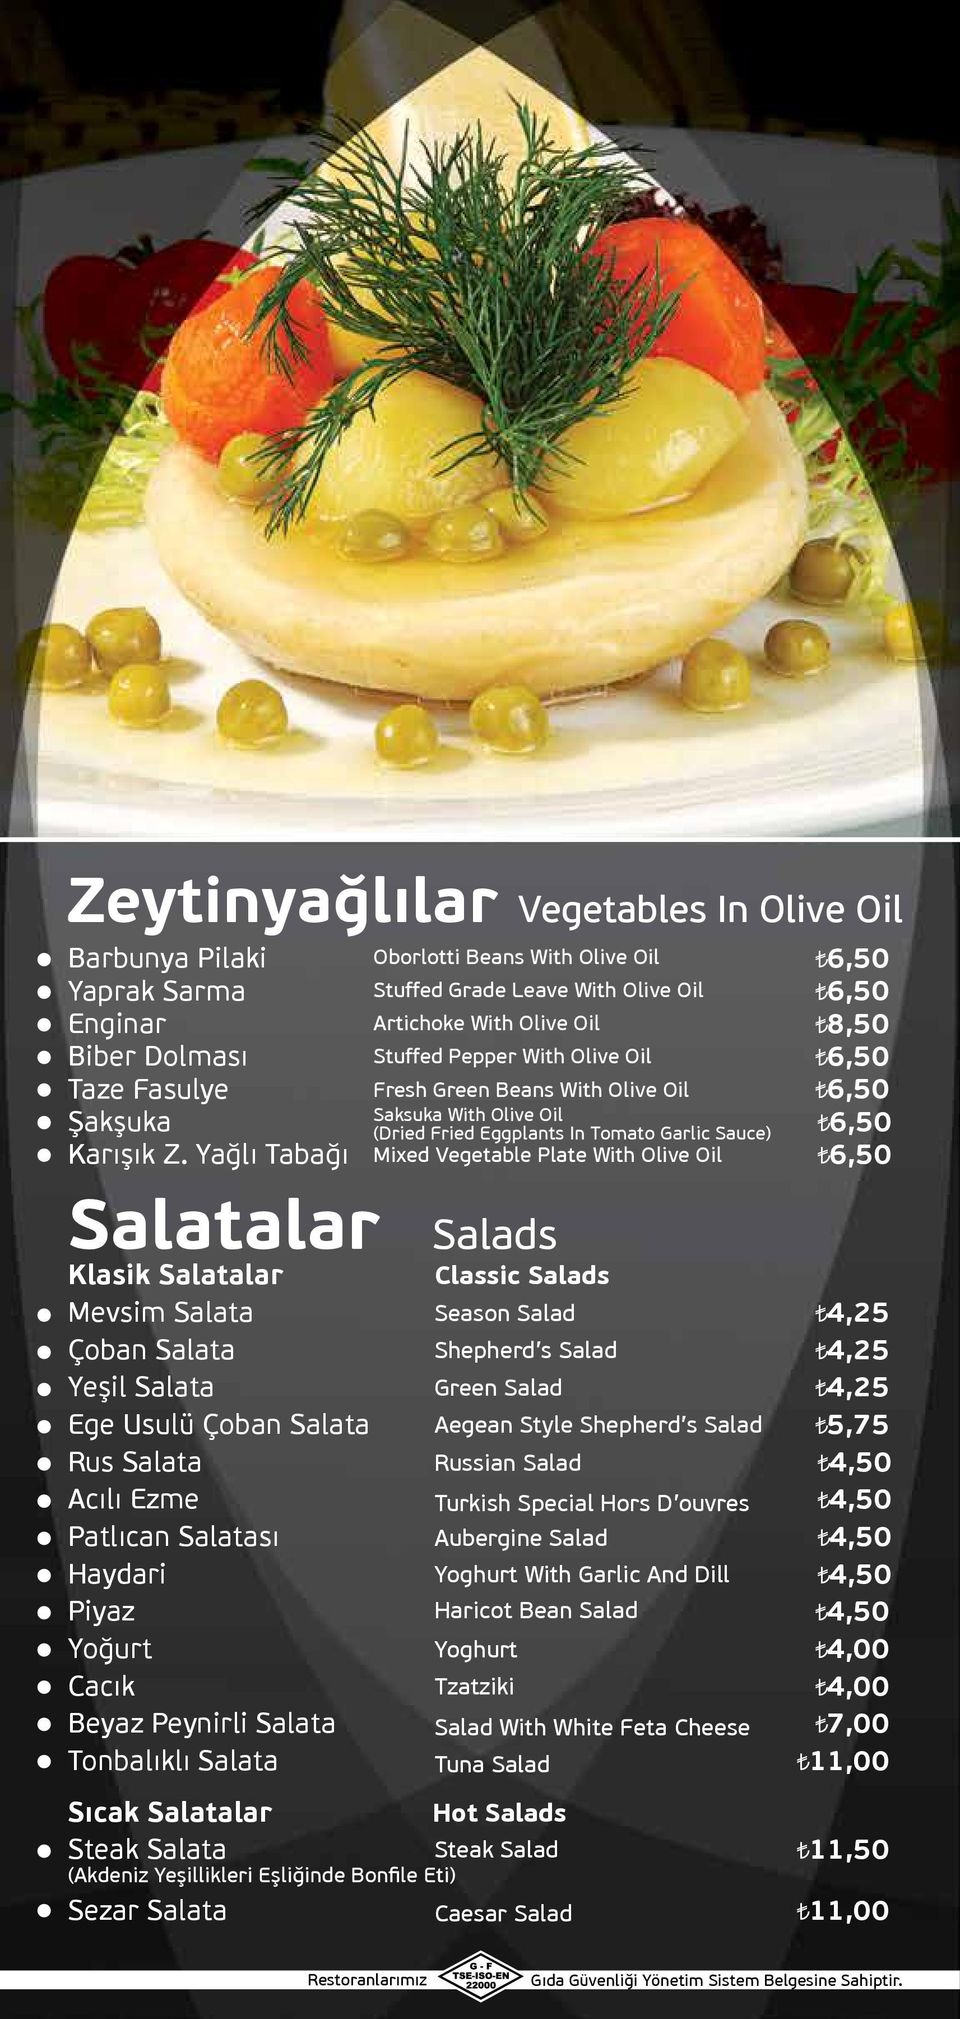 Yağlı Tabağı Mixed Vegetable Plate With Olive Oil Salatalar Salads Klasik Salatalar Mevsim Salata Classic Salads Season Salad Çoban Salata Shepherd s Salad Yeşil Salata Green Salad Ege Usulü Çoban